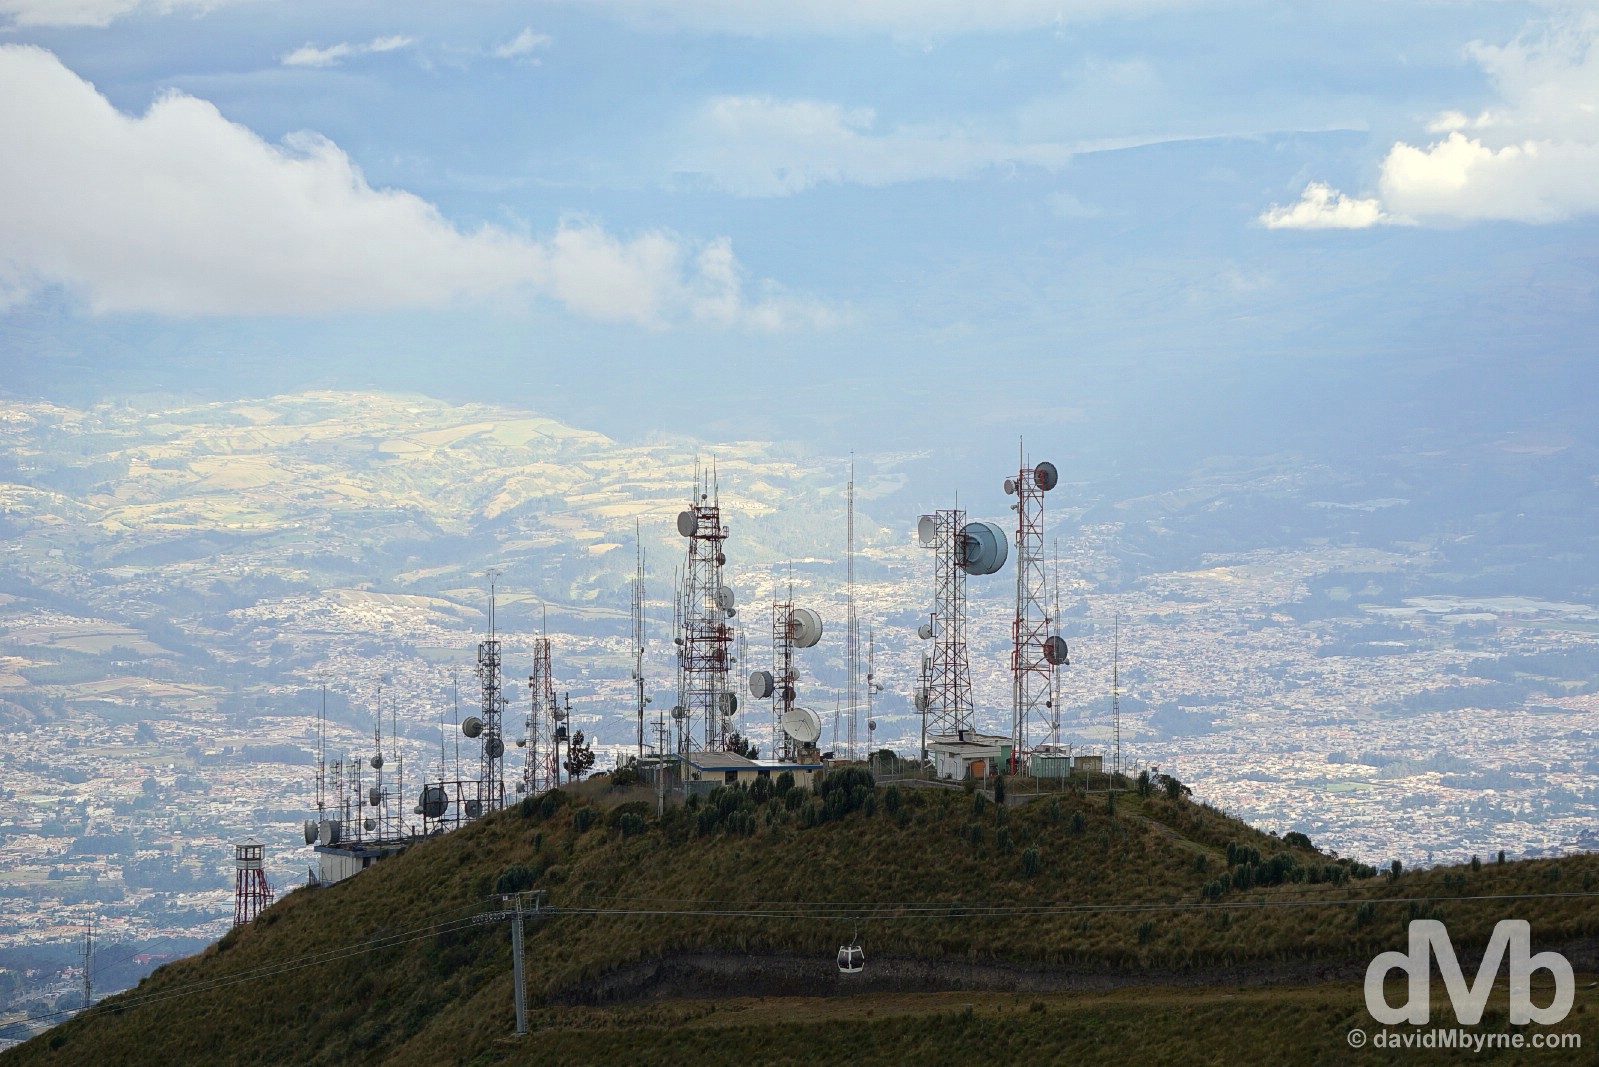 Teleferiqo on Cruz Loma overlooking Quito, Ecuador. July 5, 2015.